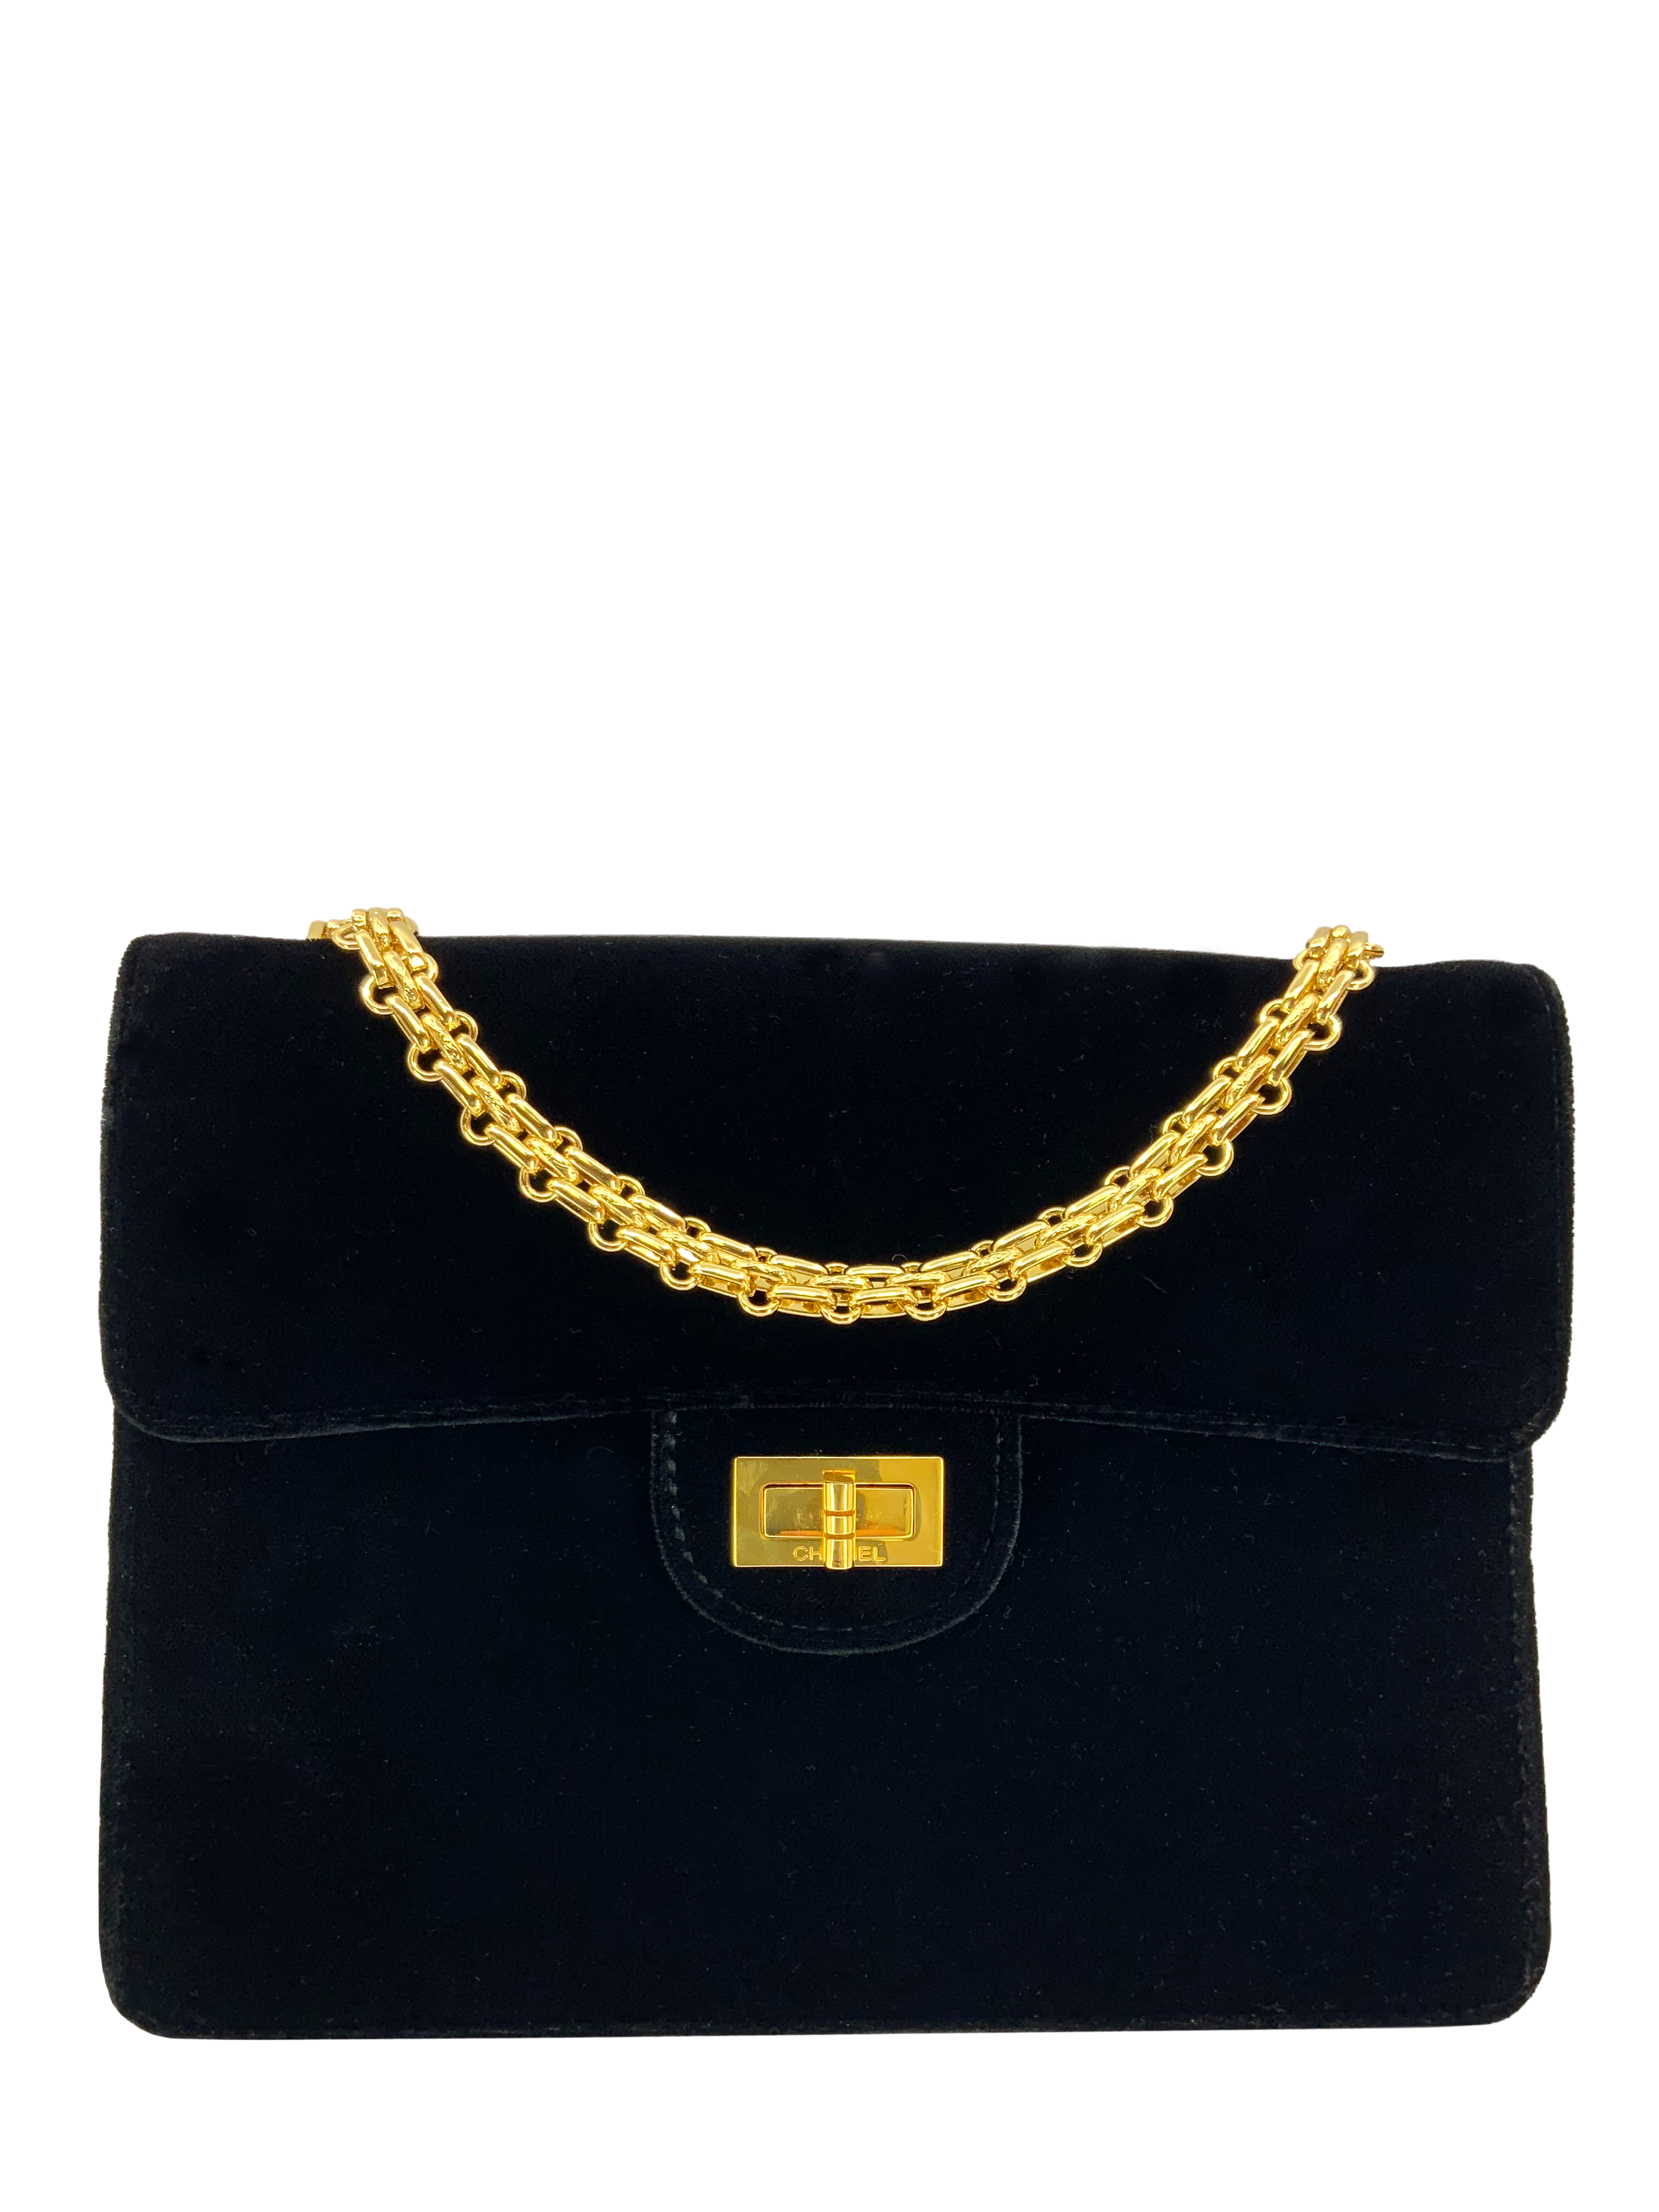 Chanel Mademoiselle Classic Single Flap Bag